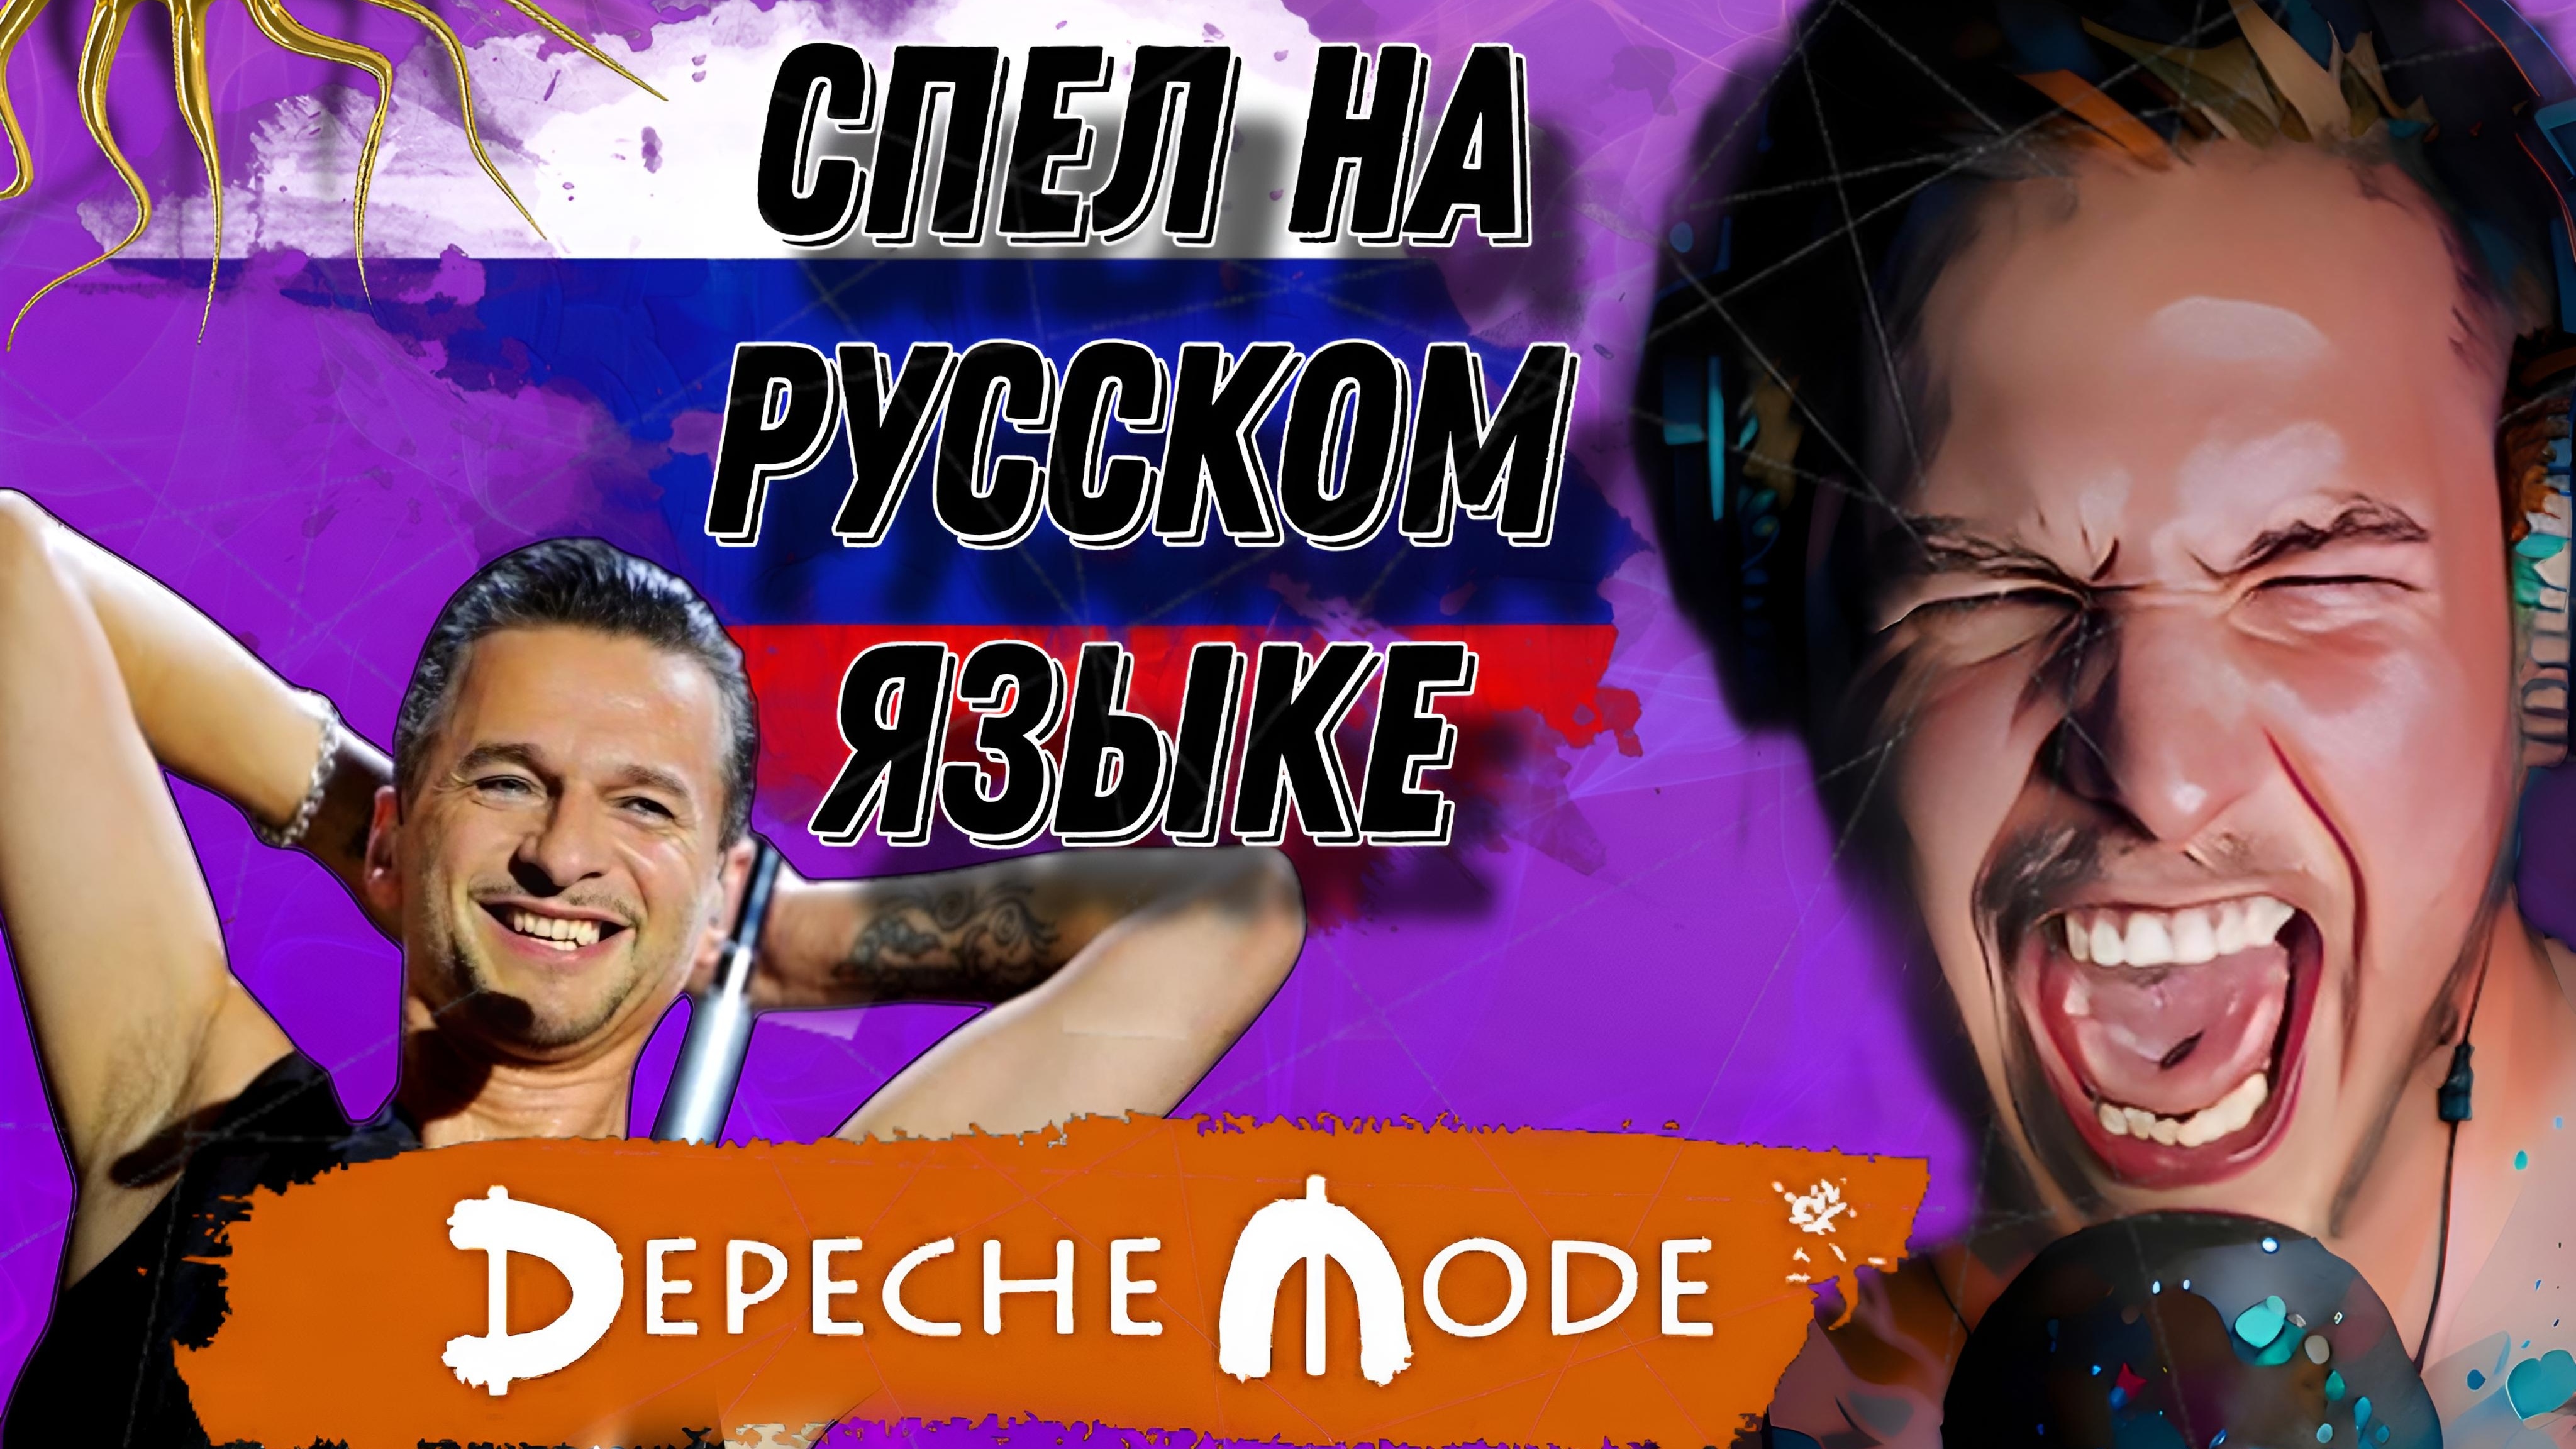 Depeche Mode сделал рок кавер на русском языке